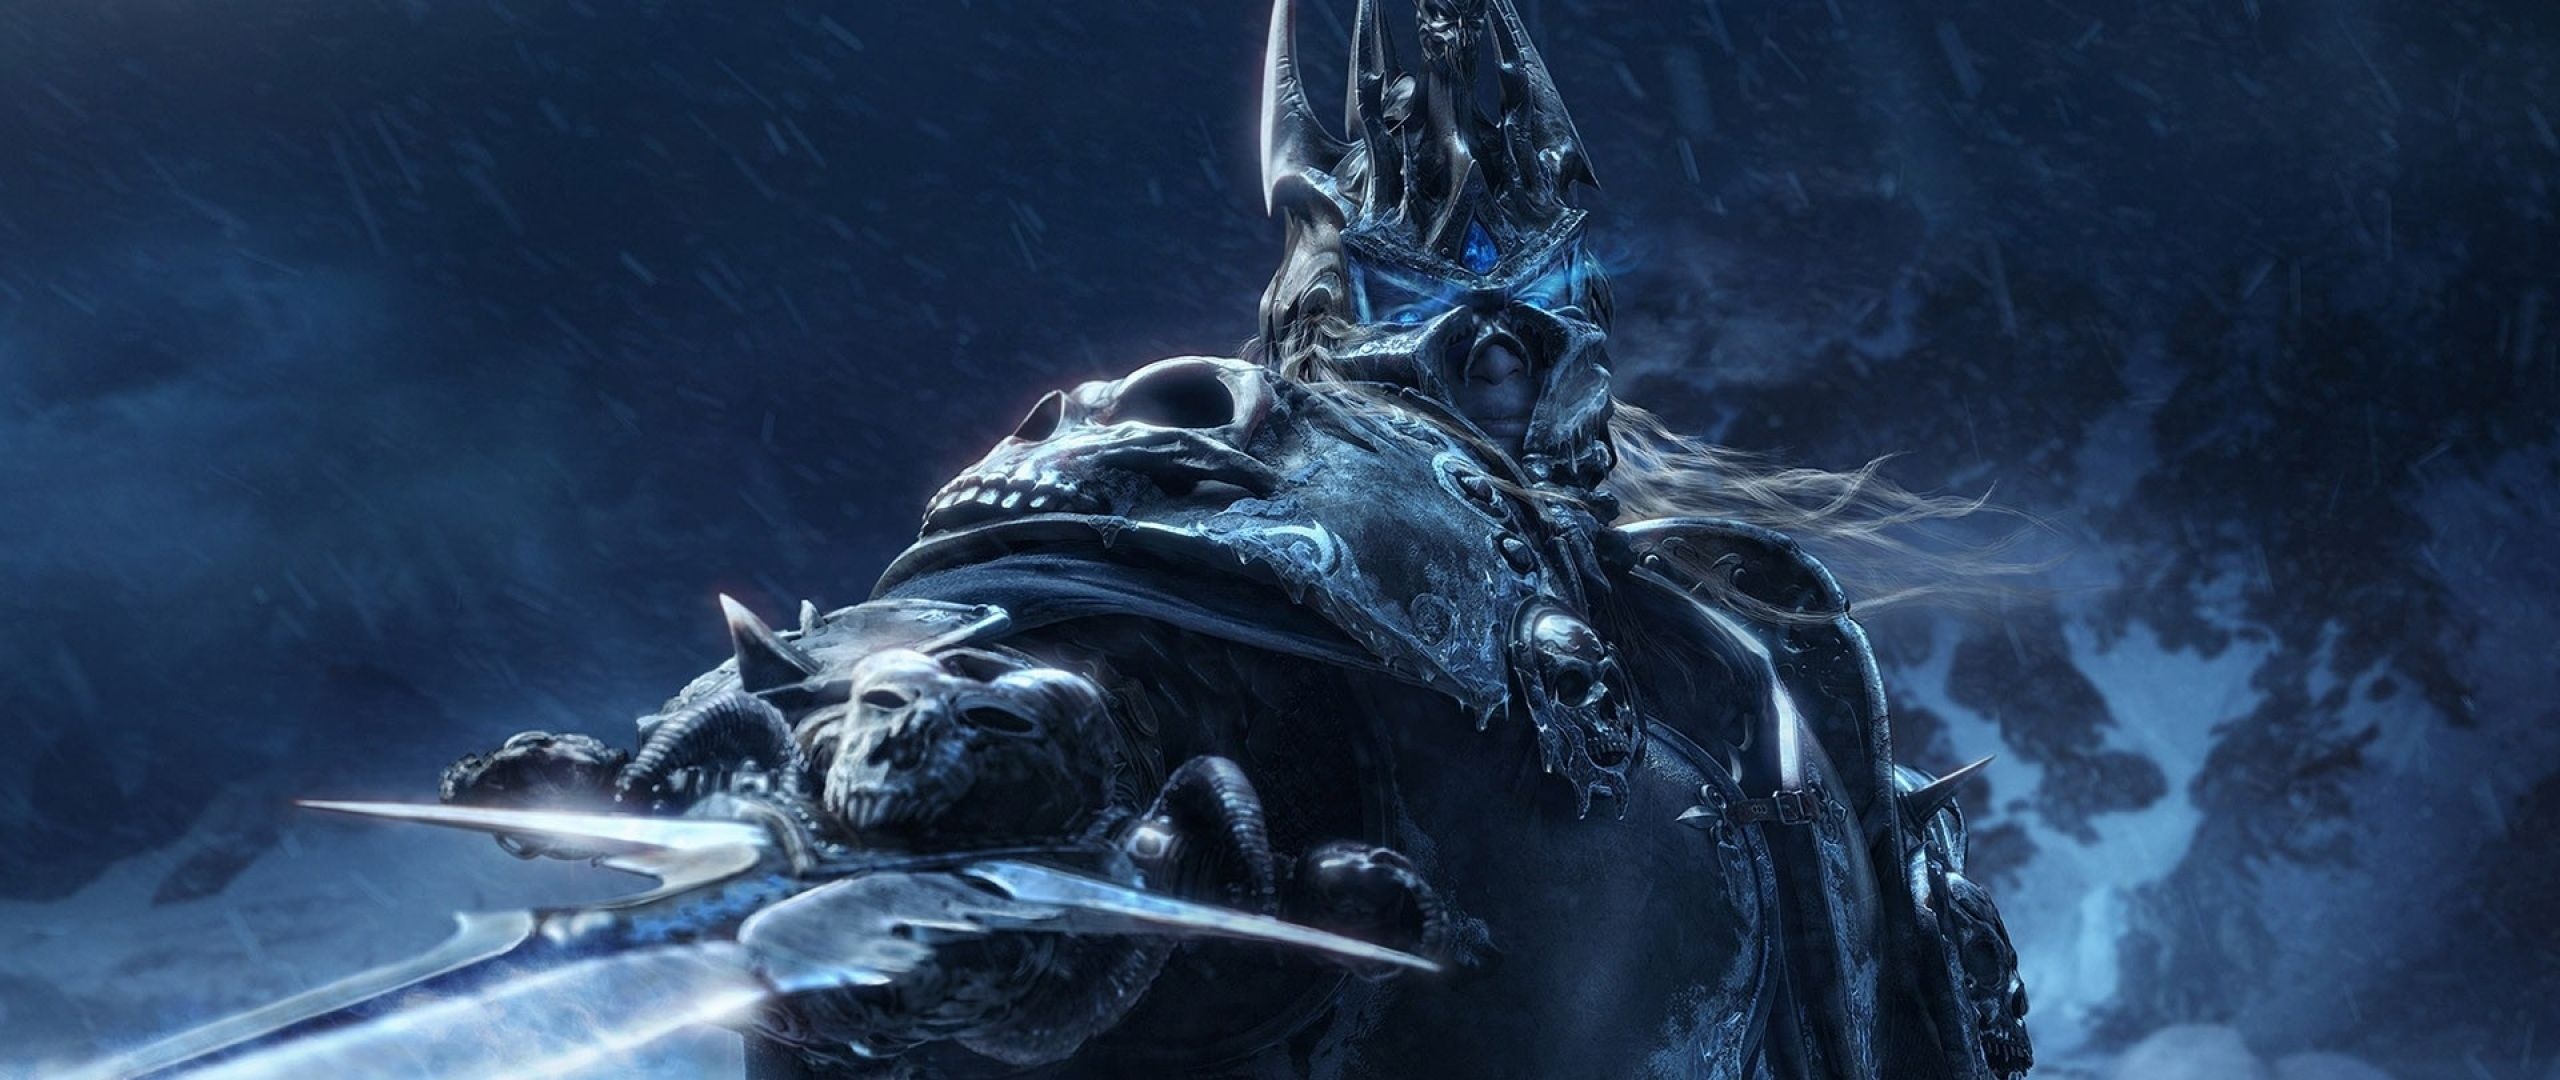 Warcraft 3 wallpaper, Arthas, Epic battle, Frozen throne, 2560x1080 Dual Screen Desktop